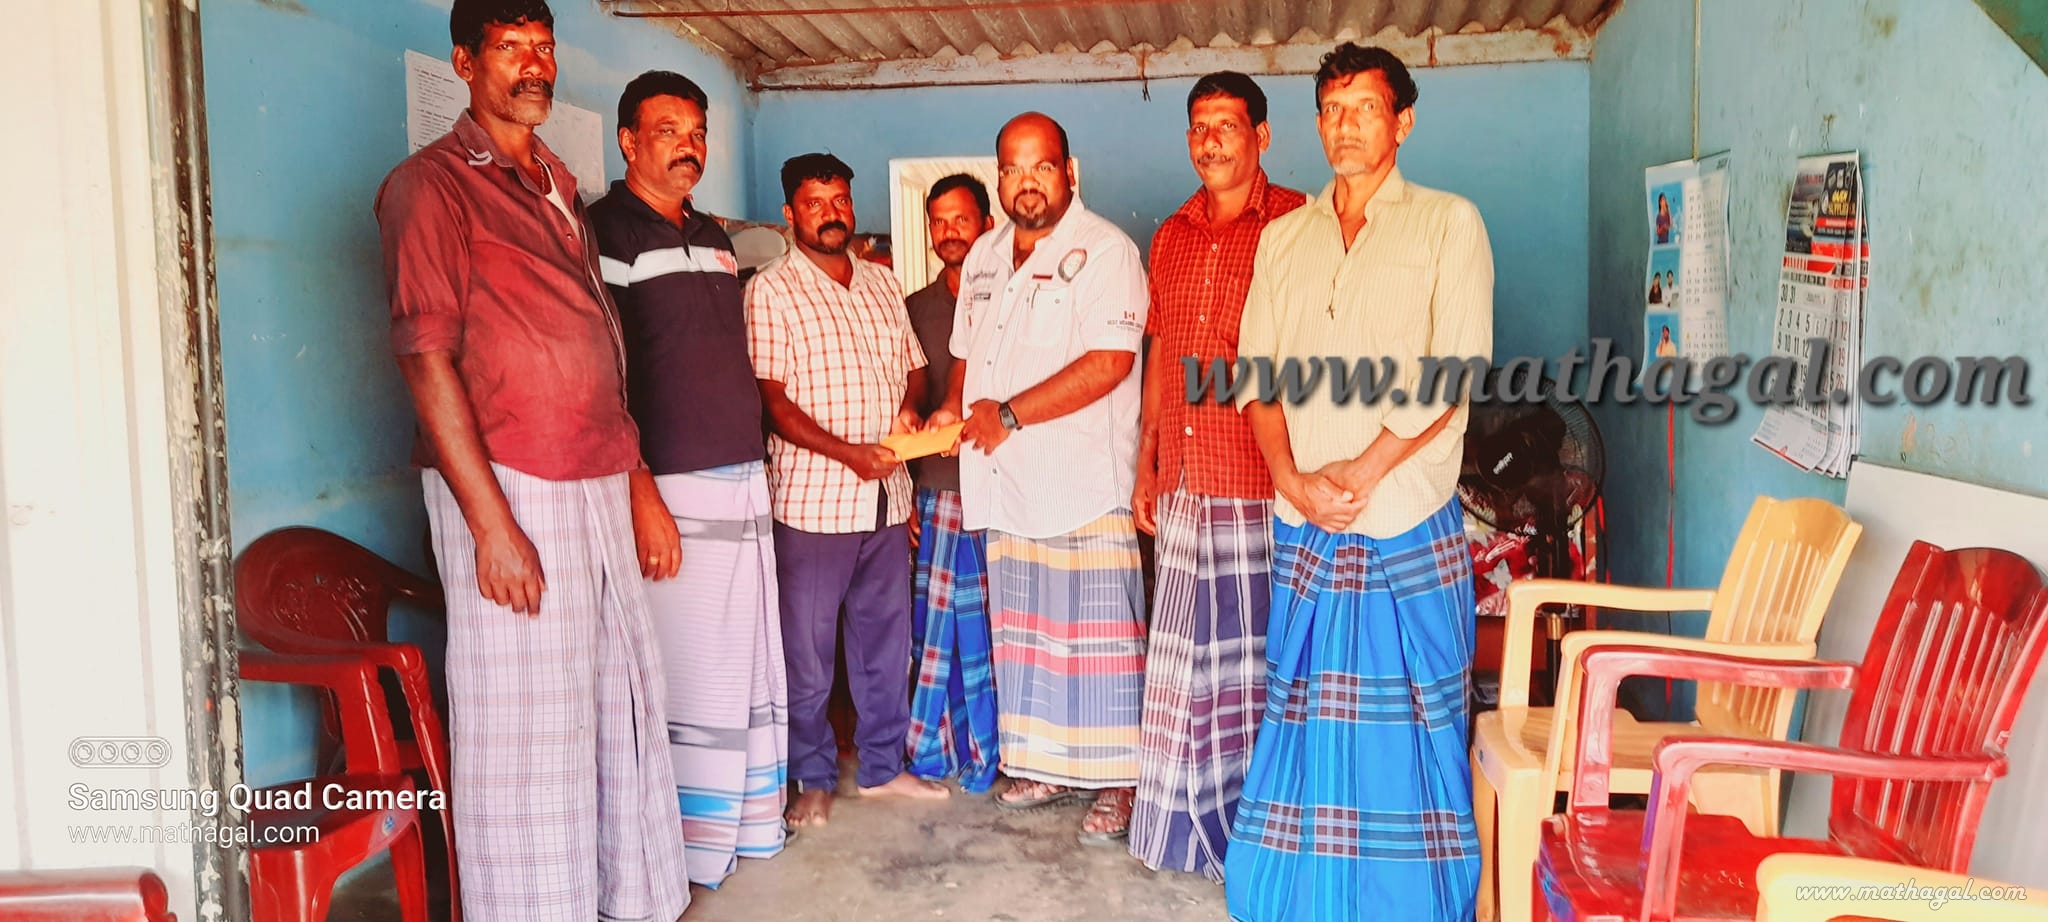 Donate by anpalakan to mathagal rural fisheries association